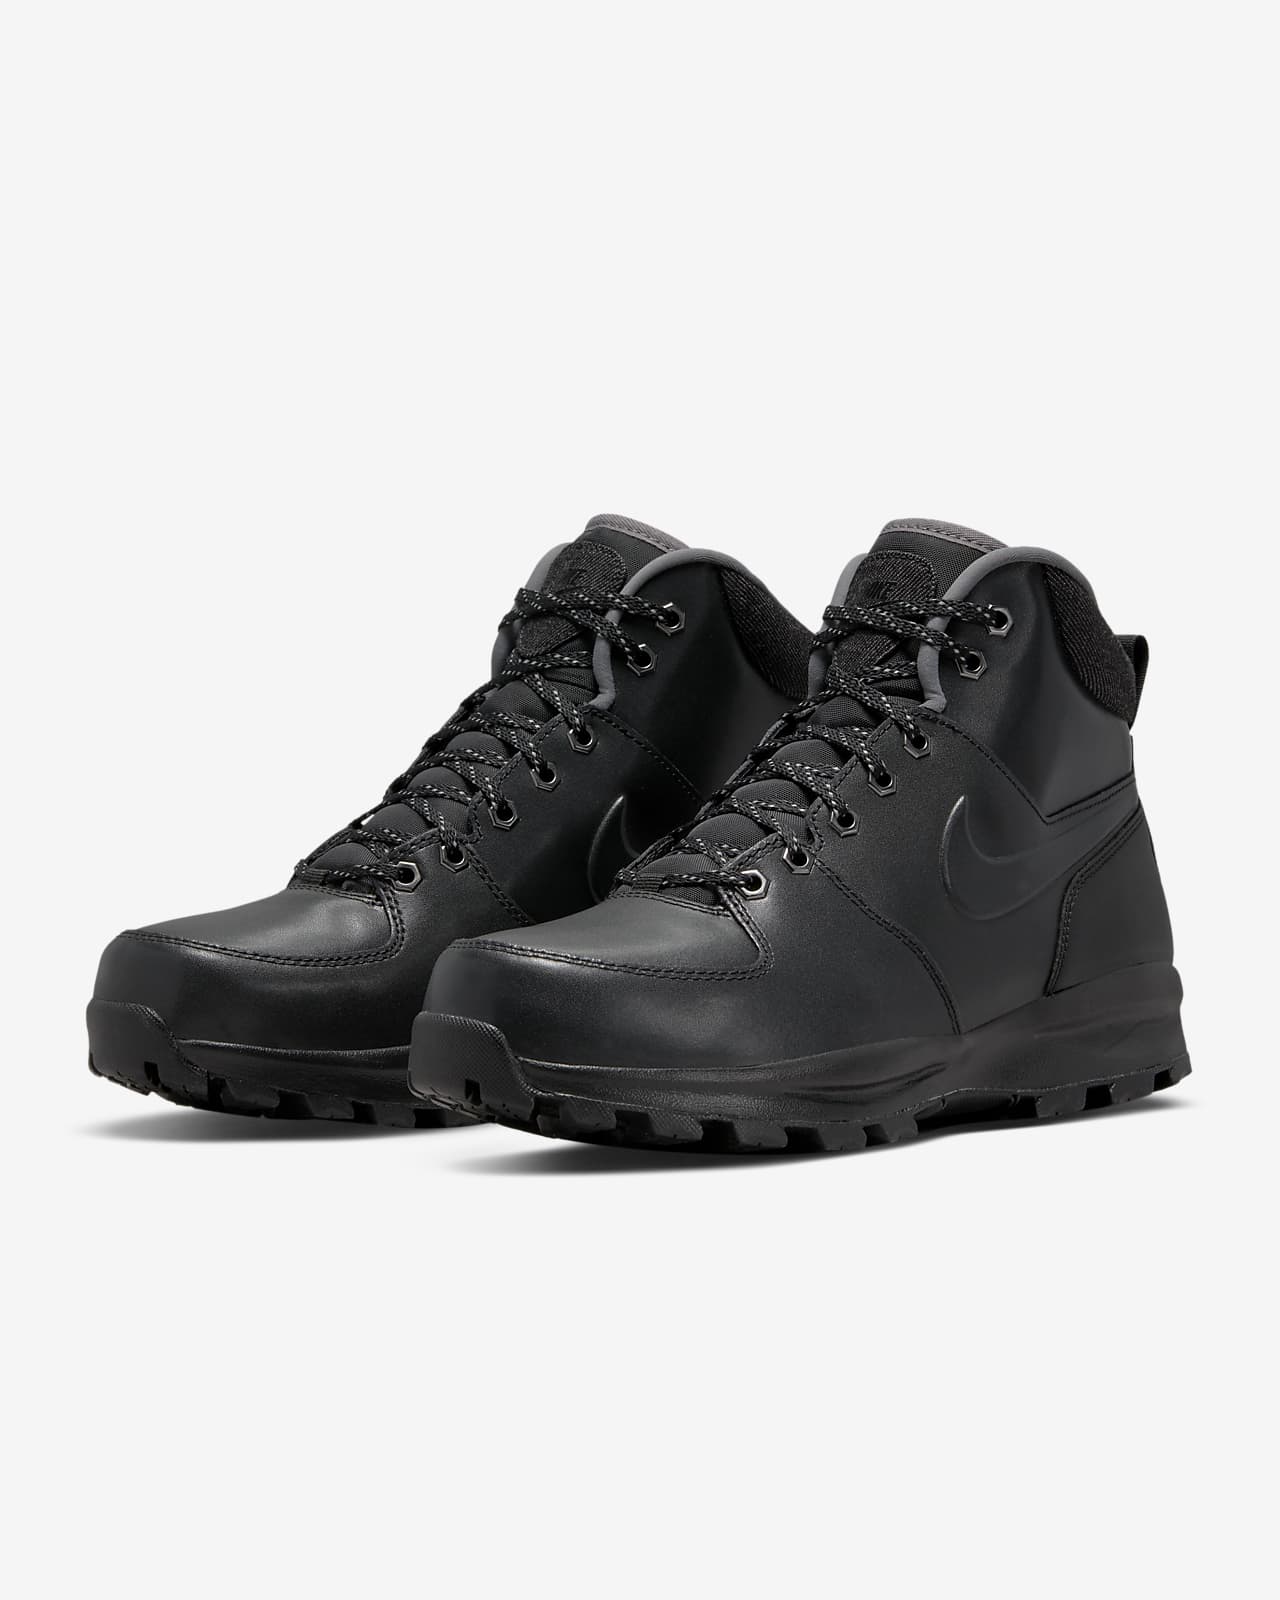 Leather Nike Men\'s Boots. Manoa SE